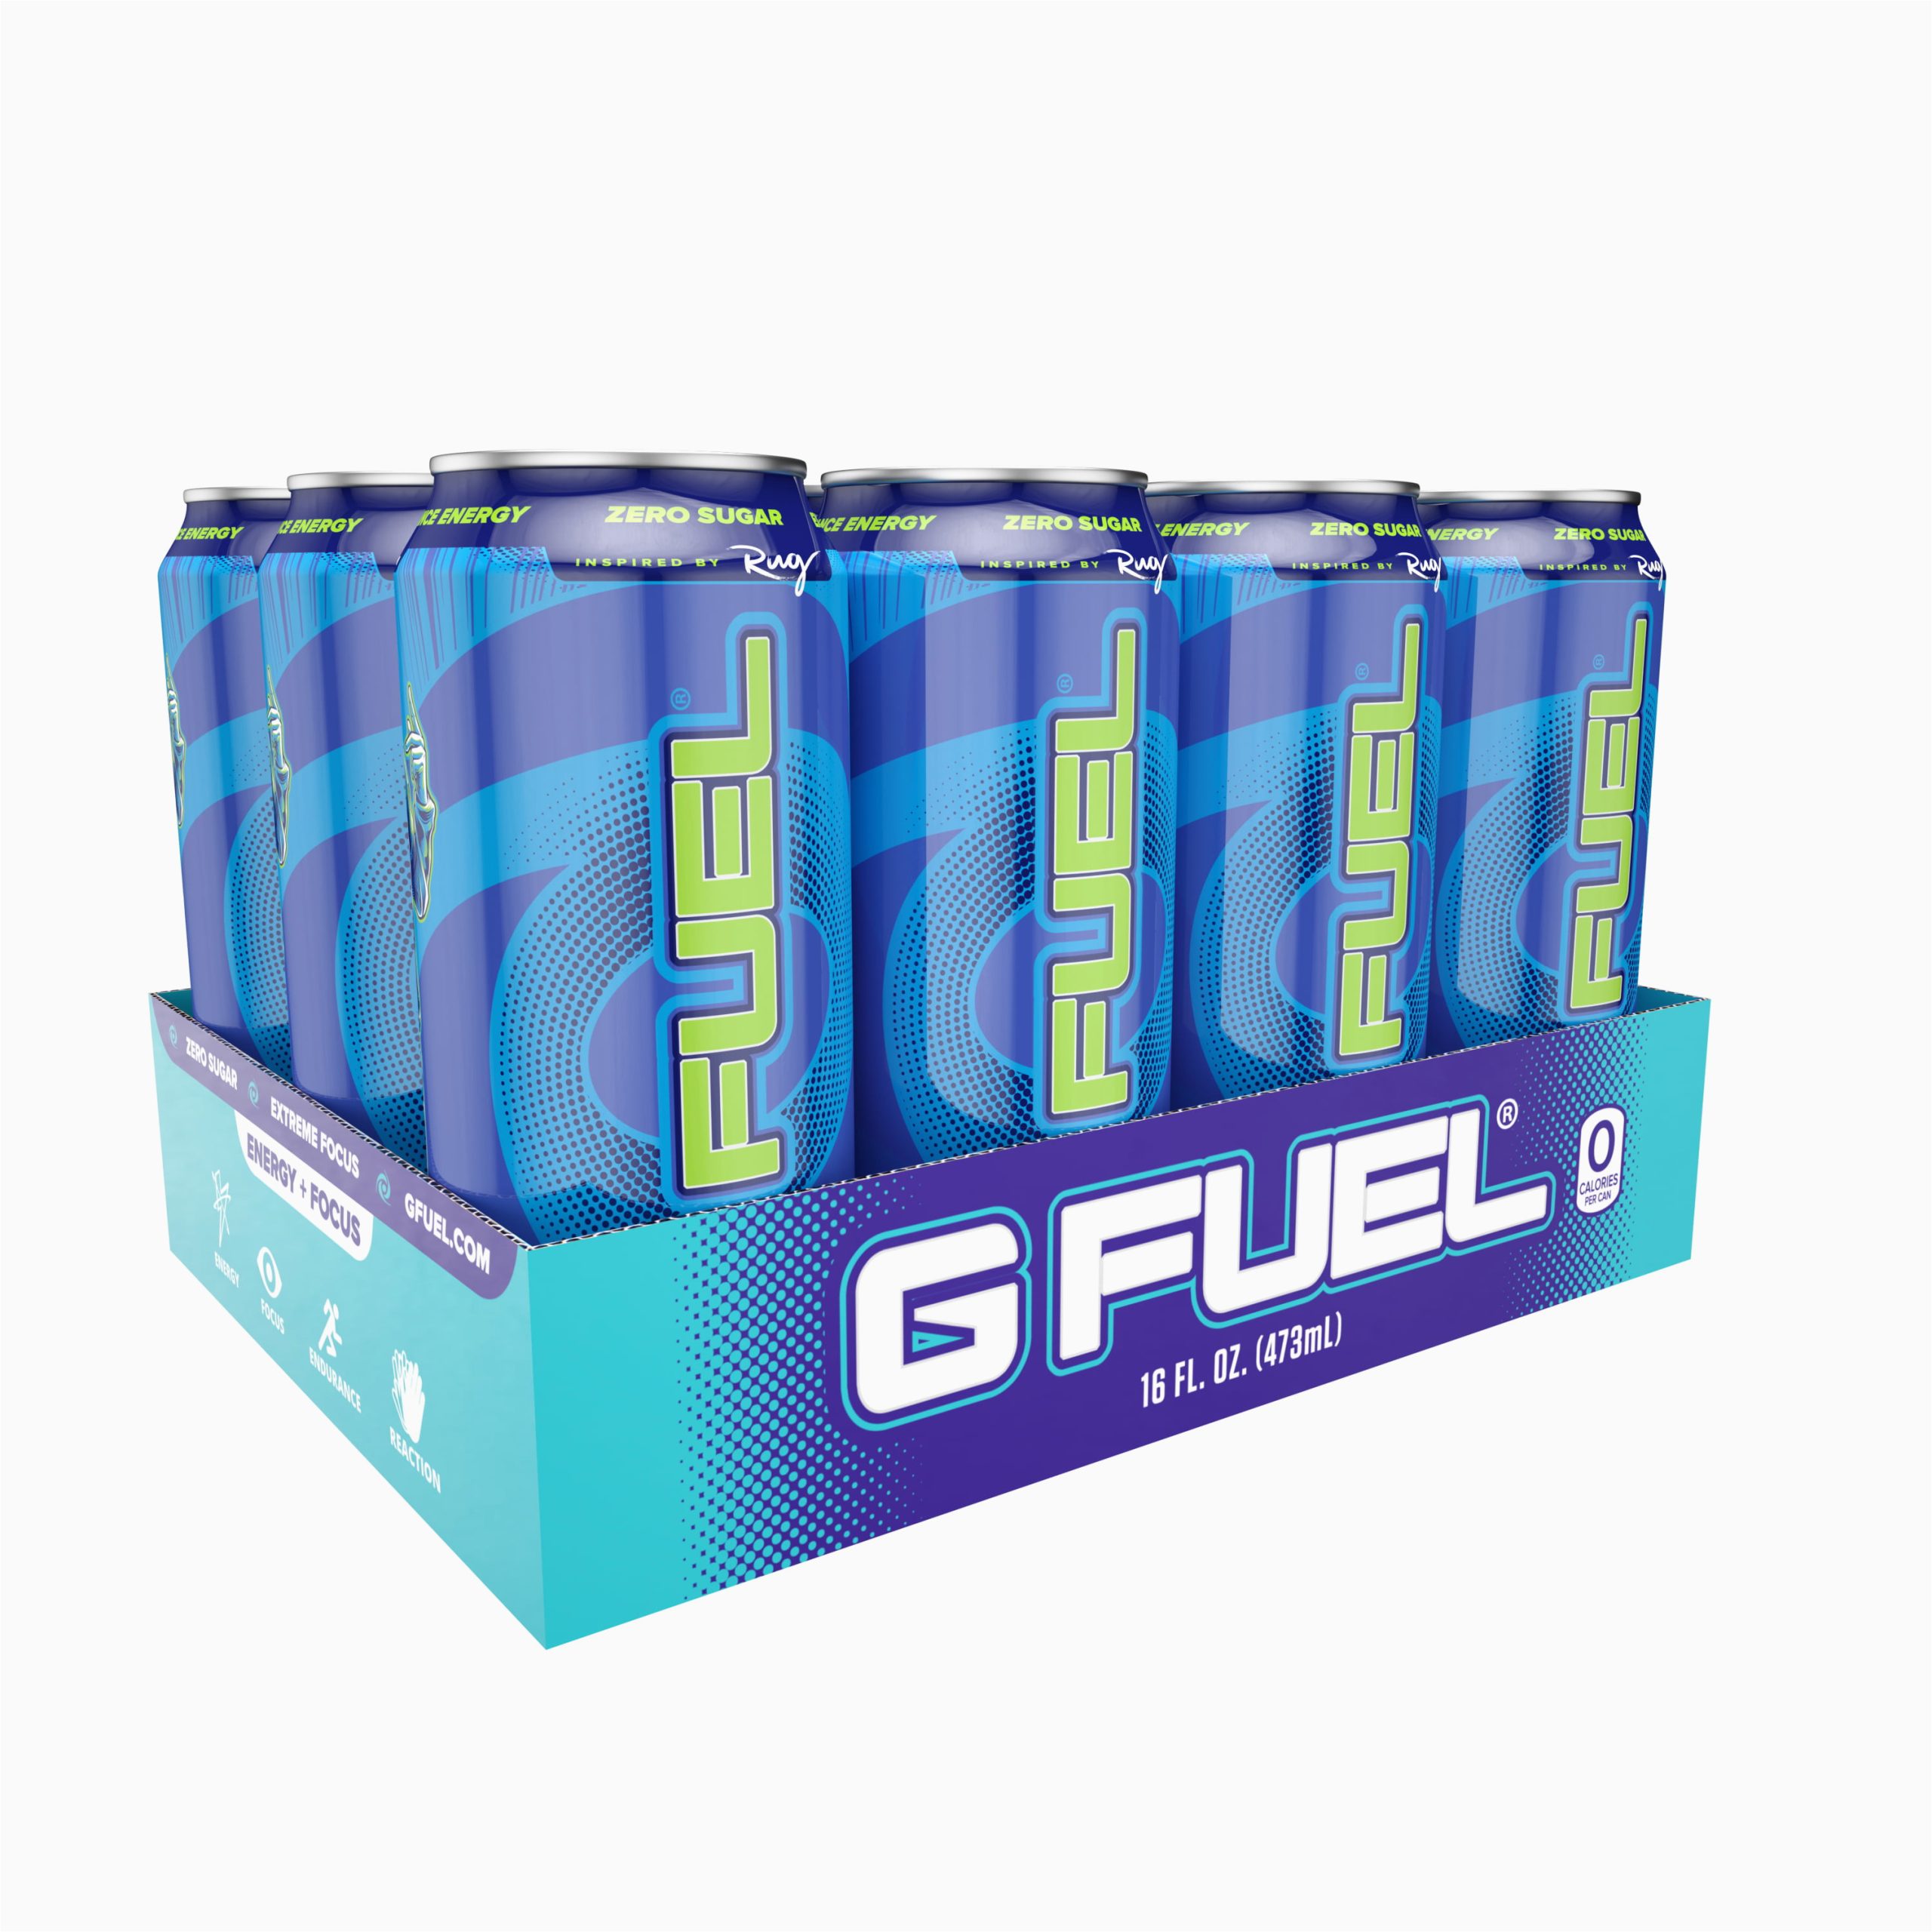 Blue Chug Rug Gfuel G Fuel sour Chug Rug Sugar Free Energy & Endurance Drink, 16 Fl Oz, 12 Count